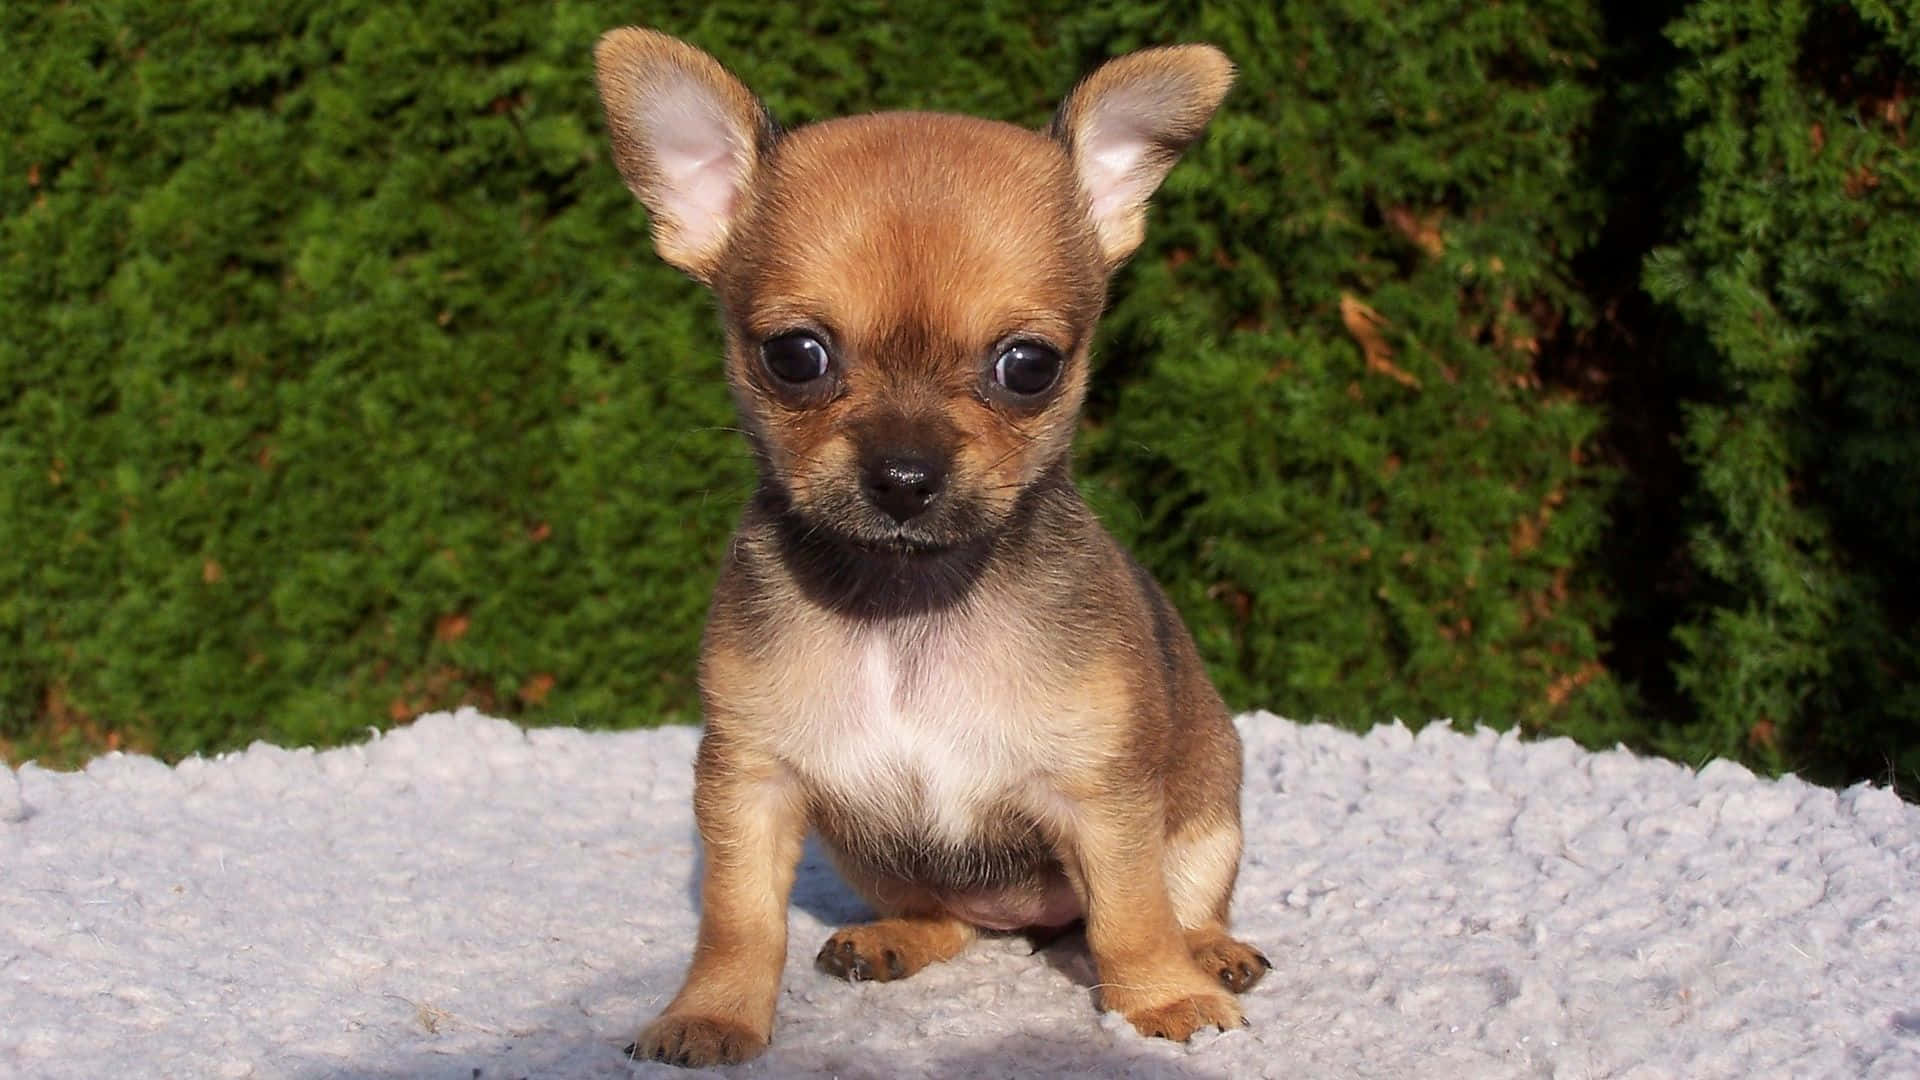 “A Cheeky Chihuahua Dog”